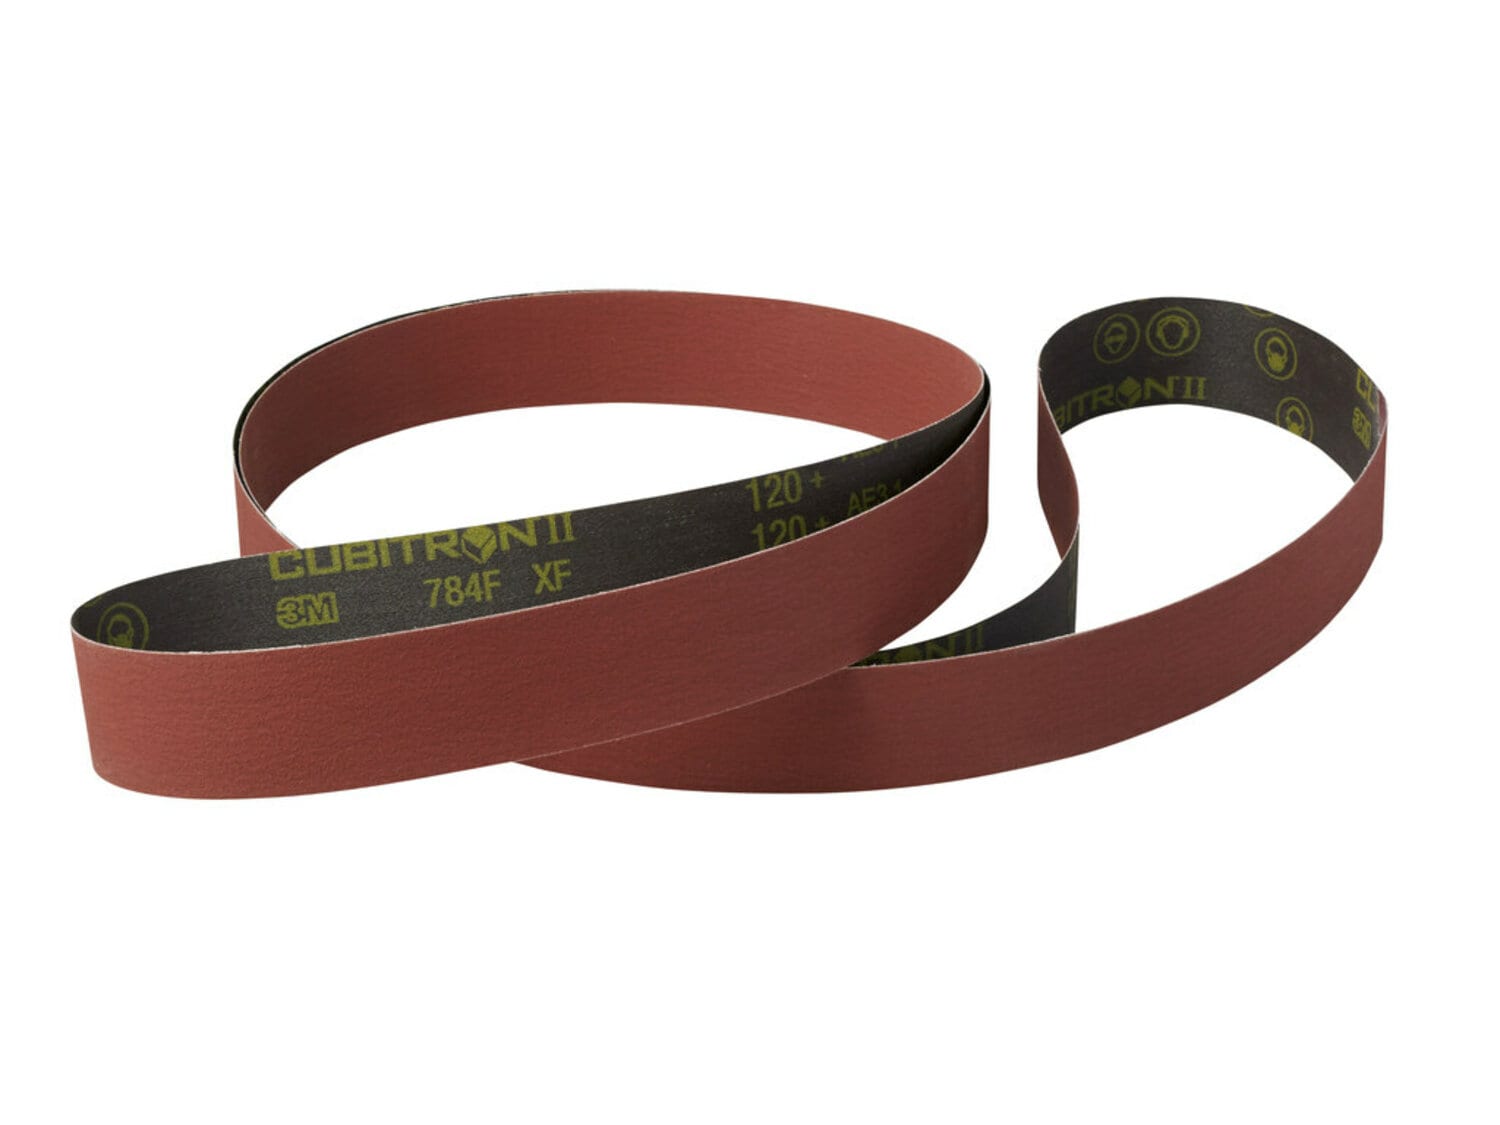 7100220117 - 3M Cubitron ll Cloth Belt 784F, 120+ XF-weight, 1 in x 21 in, Fabri- lok, Single-flex